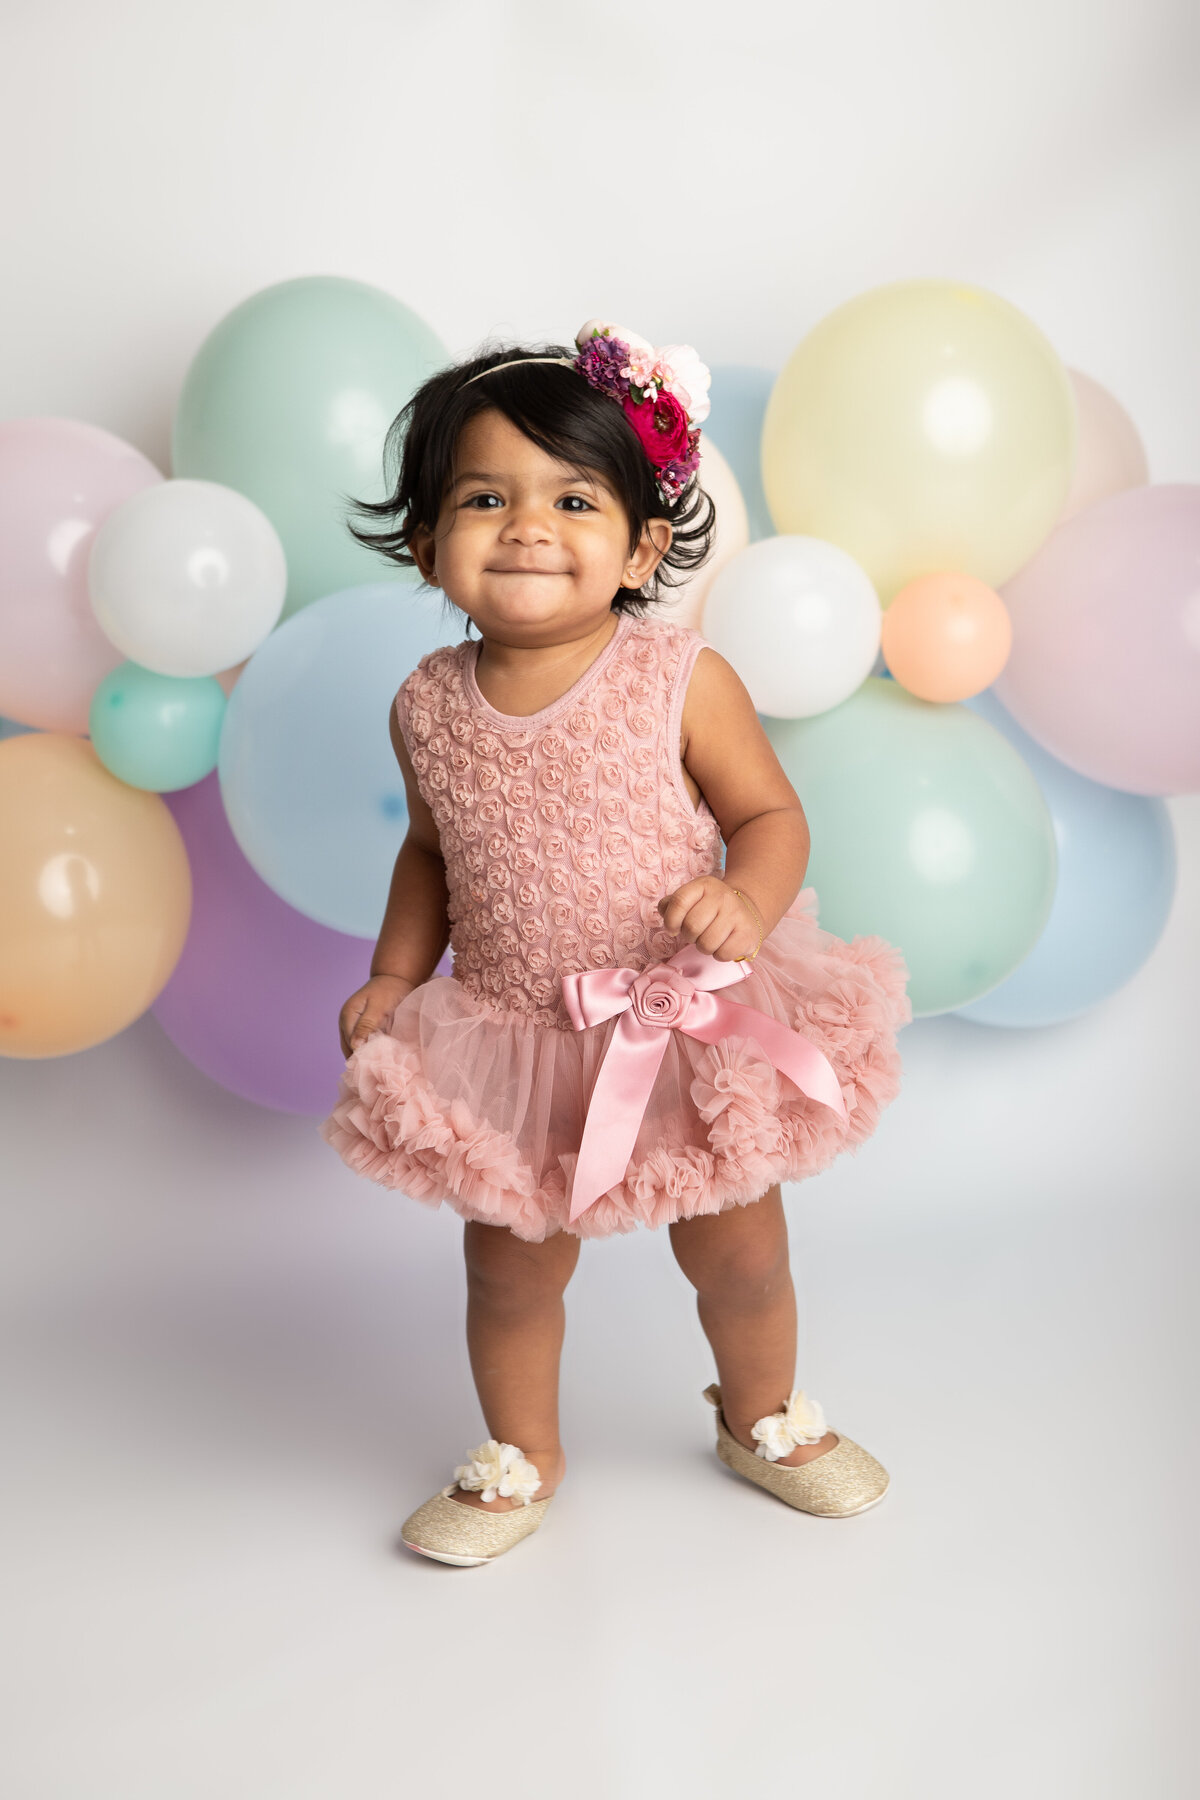 Birthday baby girl with a rainbow balloon garland